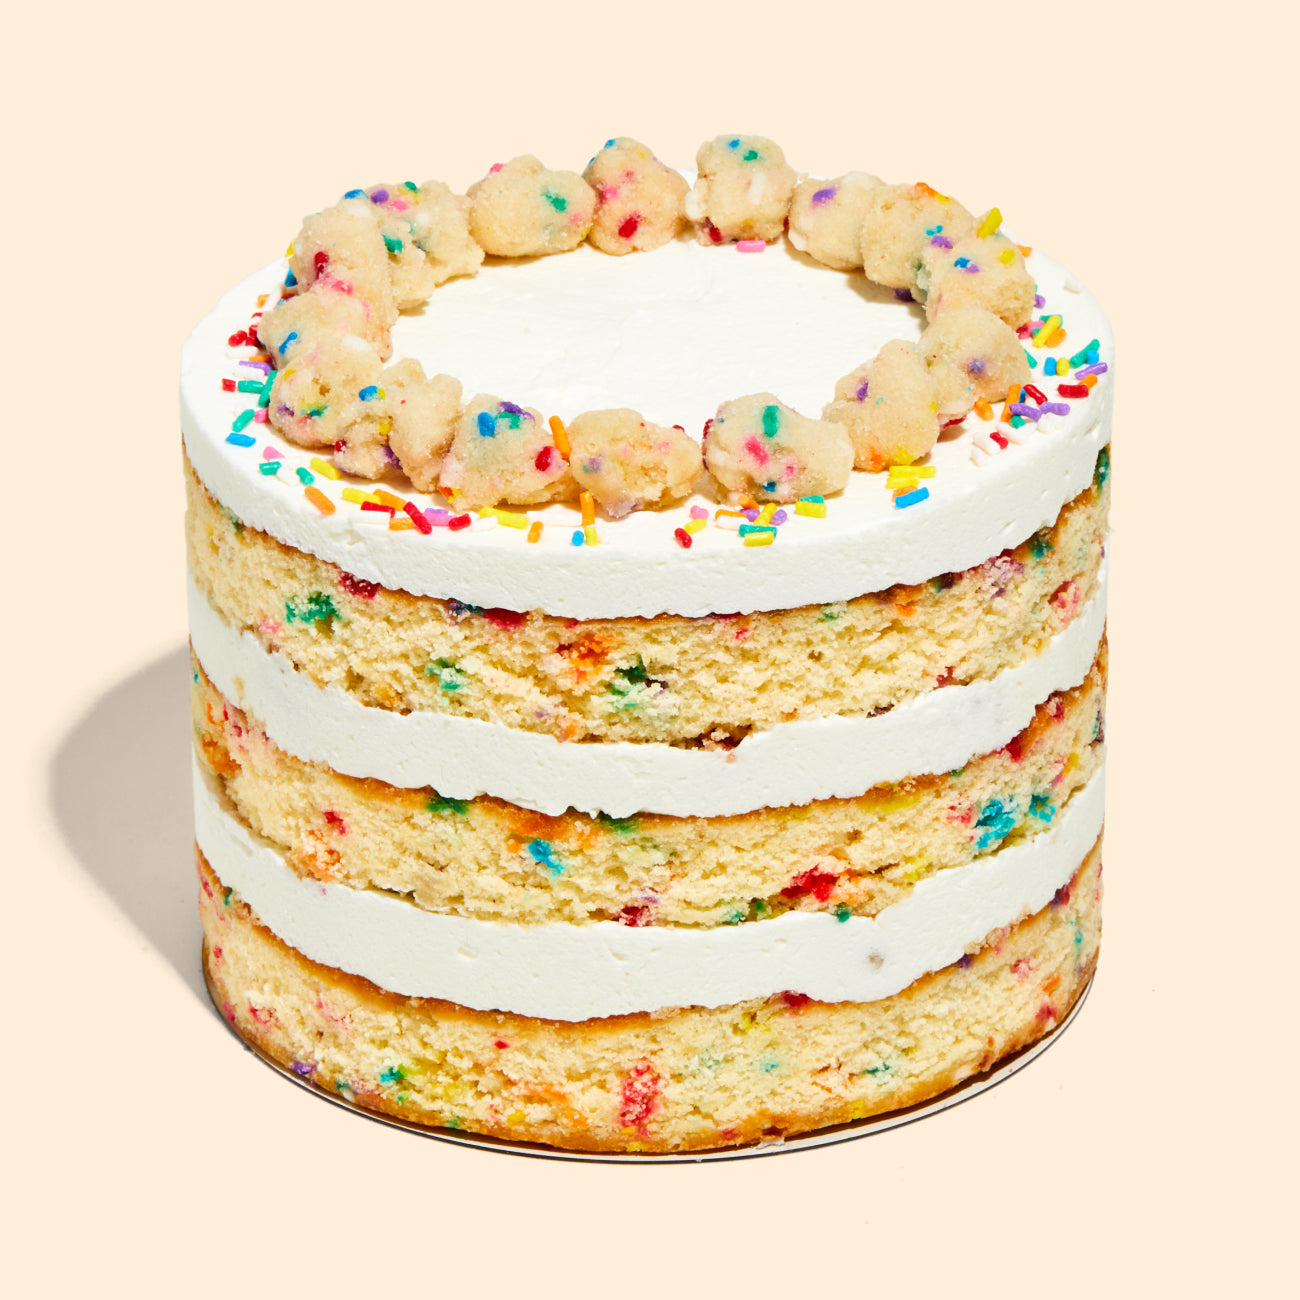 Milk Bar Ice Cream Review 2023: Birthday Cake, Pie, Cereal Milk, Cornflake  Chocolate Chip Januaryshmallow